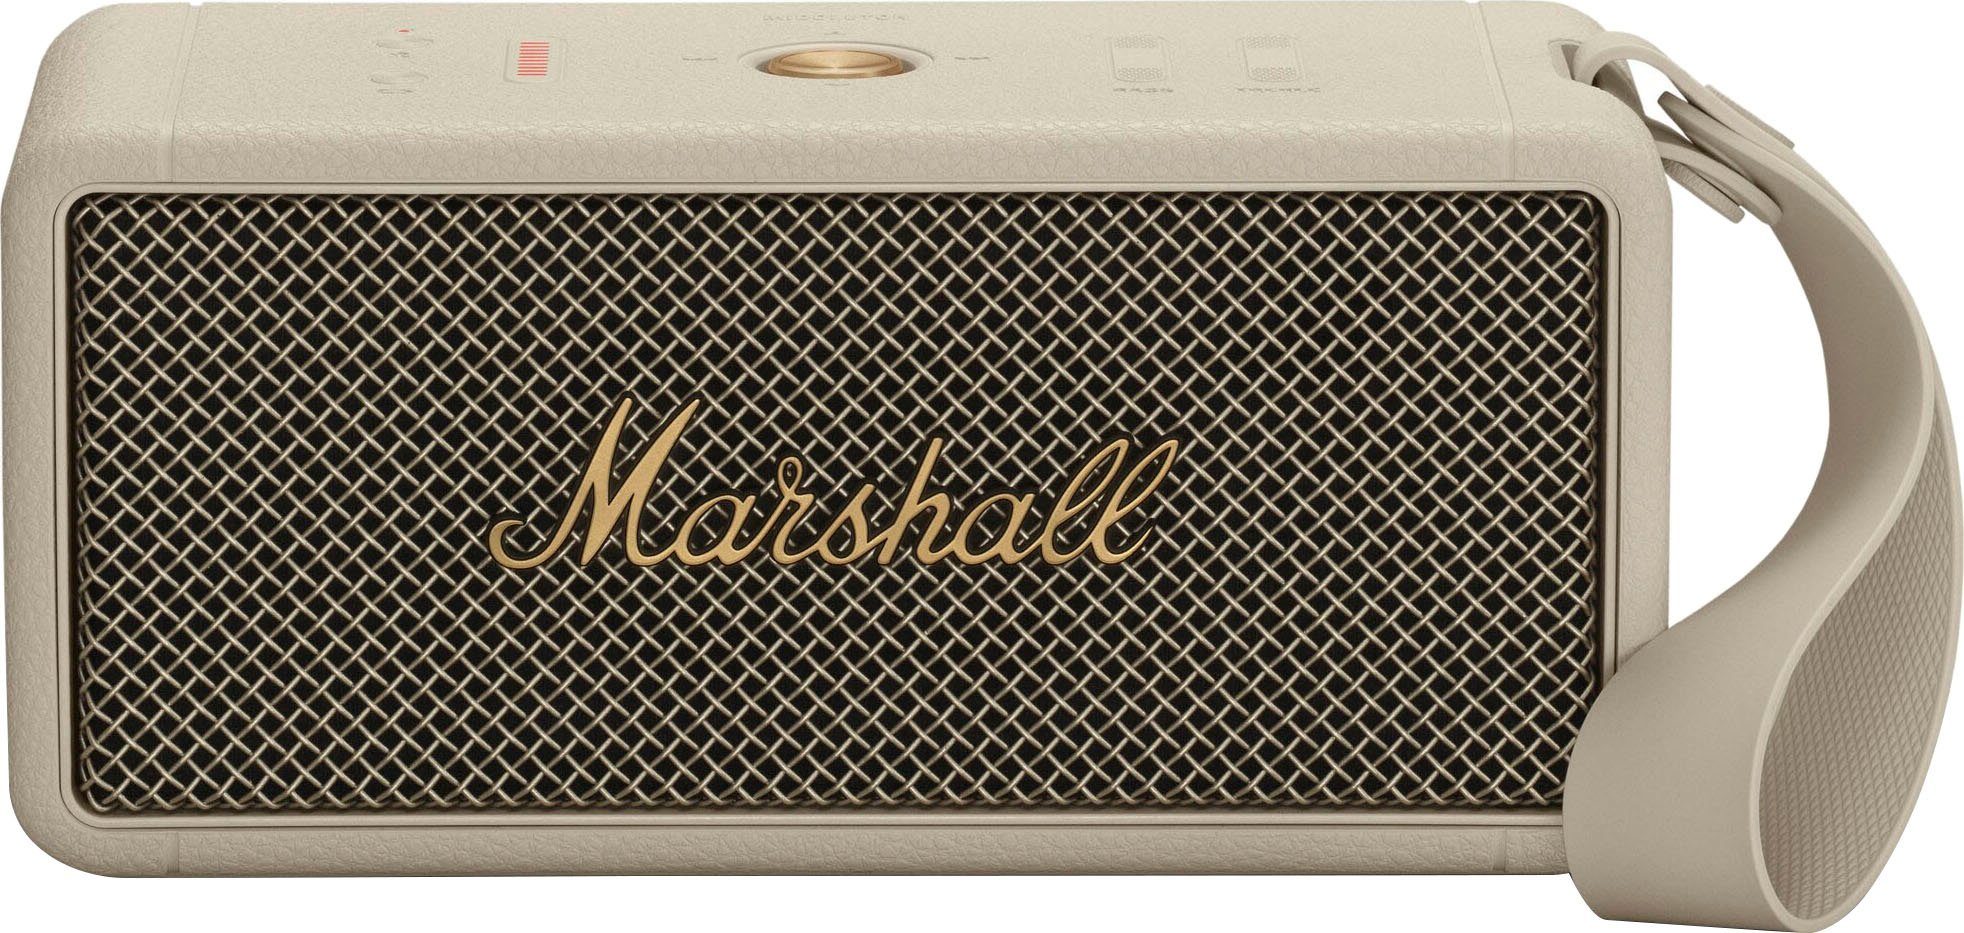 Marshall Middleton Stereo Lautsprecher (Bluetooth, W) Cream 110